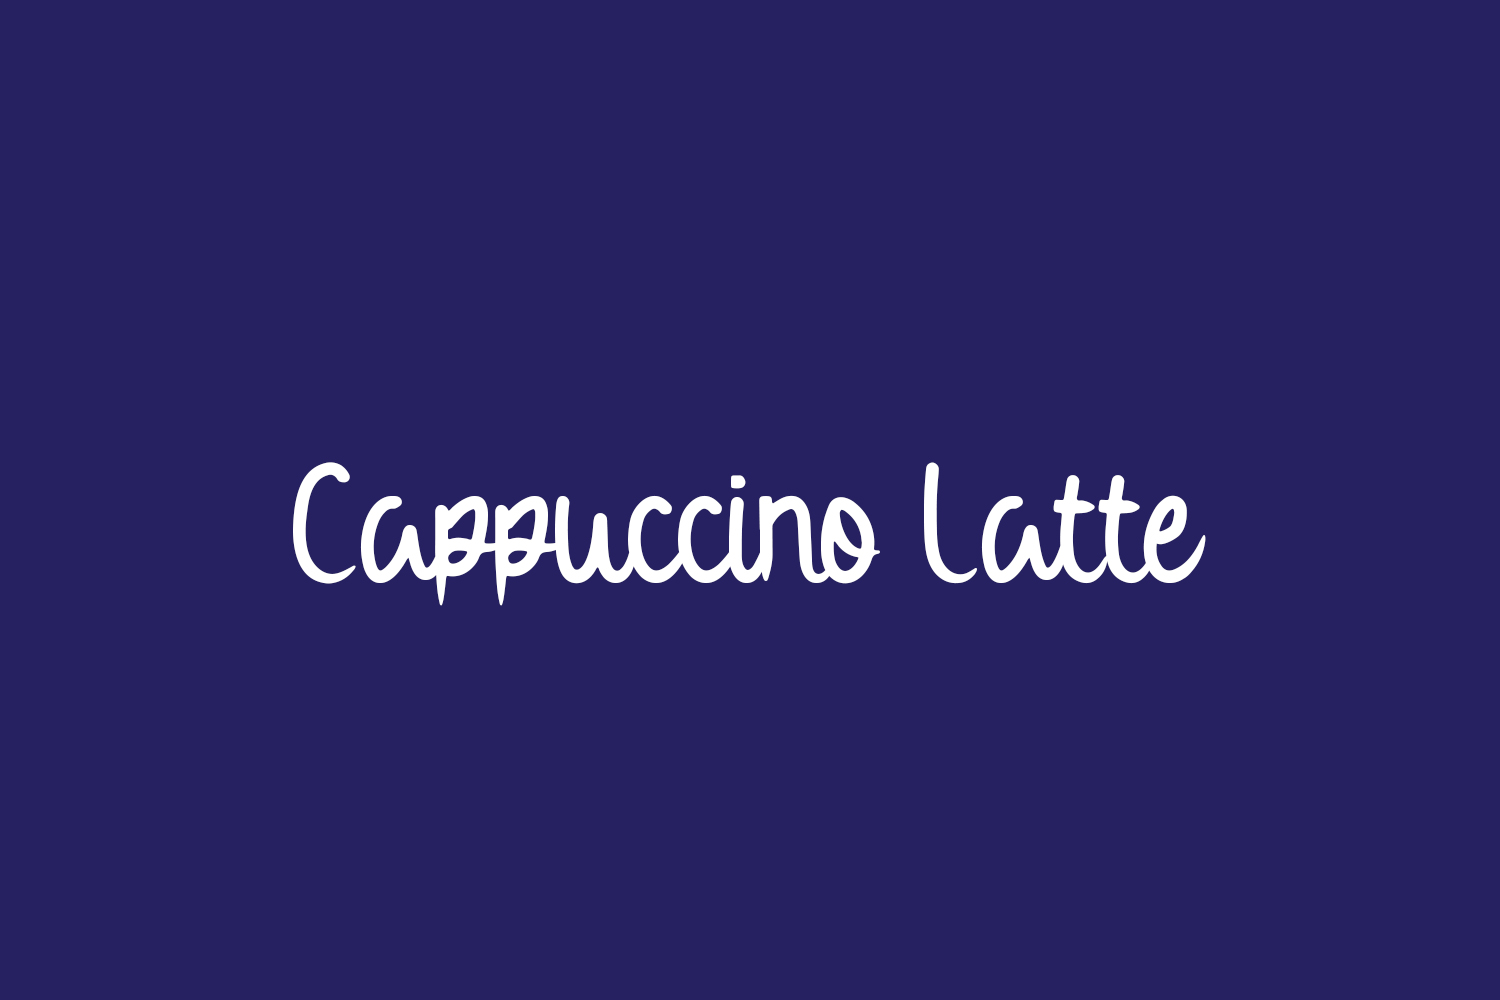 Cappuccino Latte Free Font